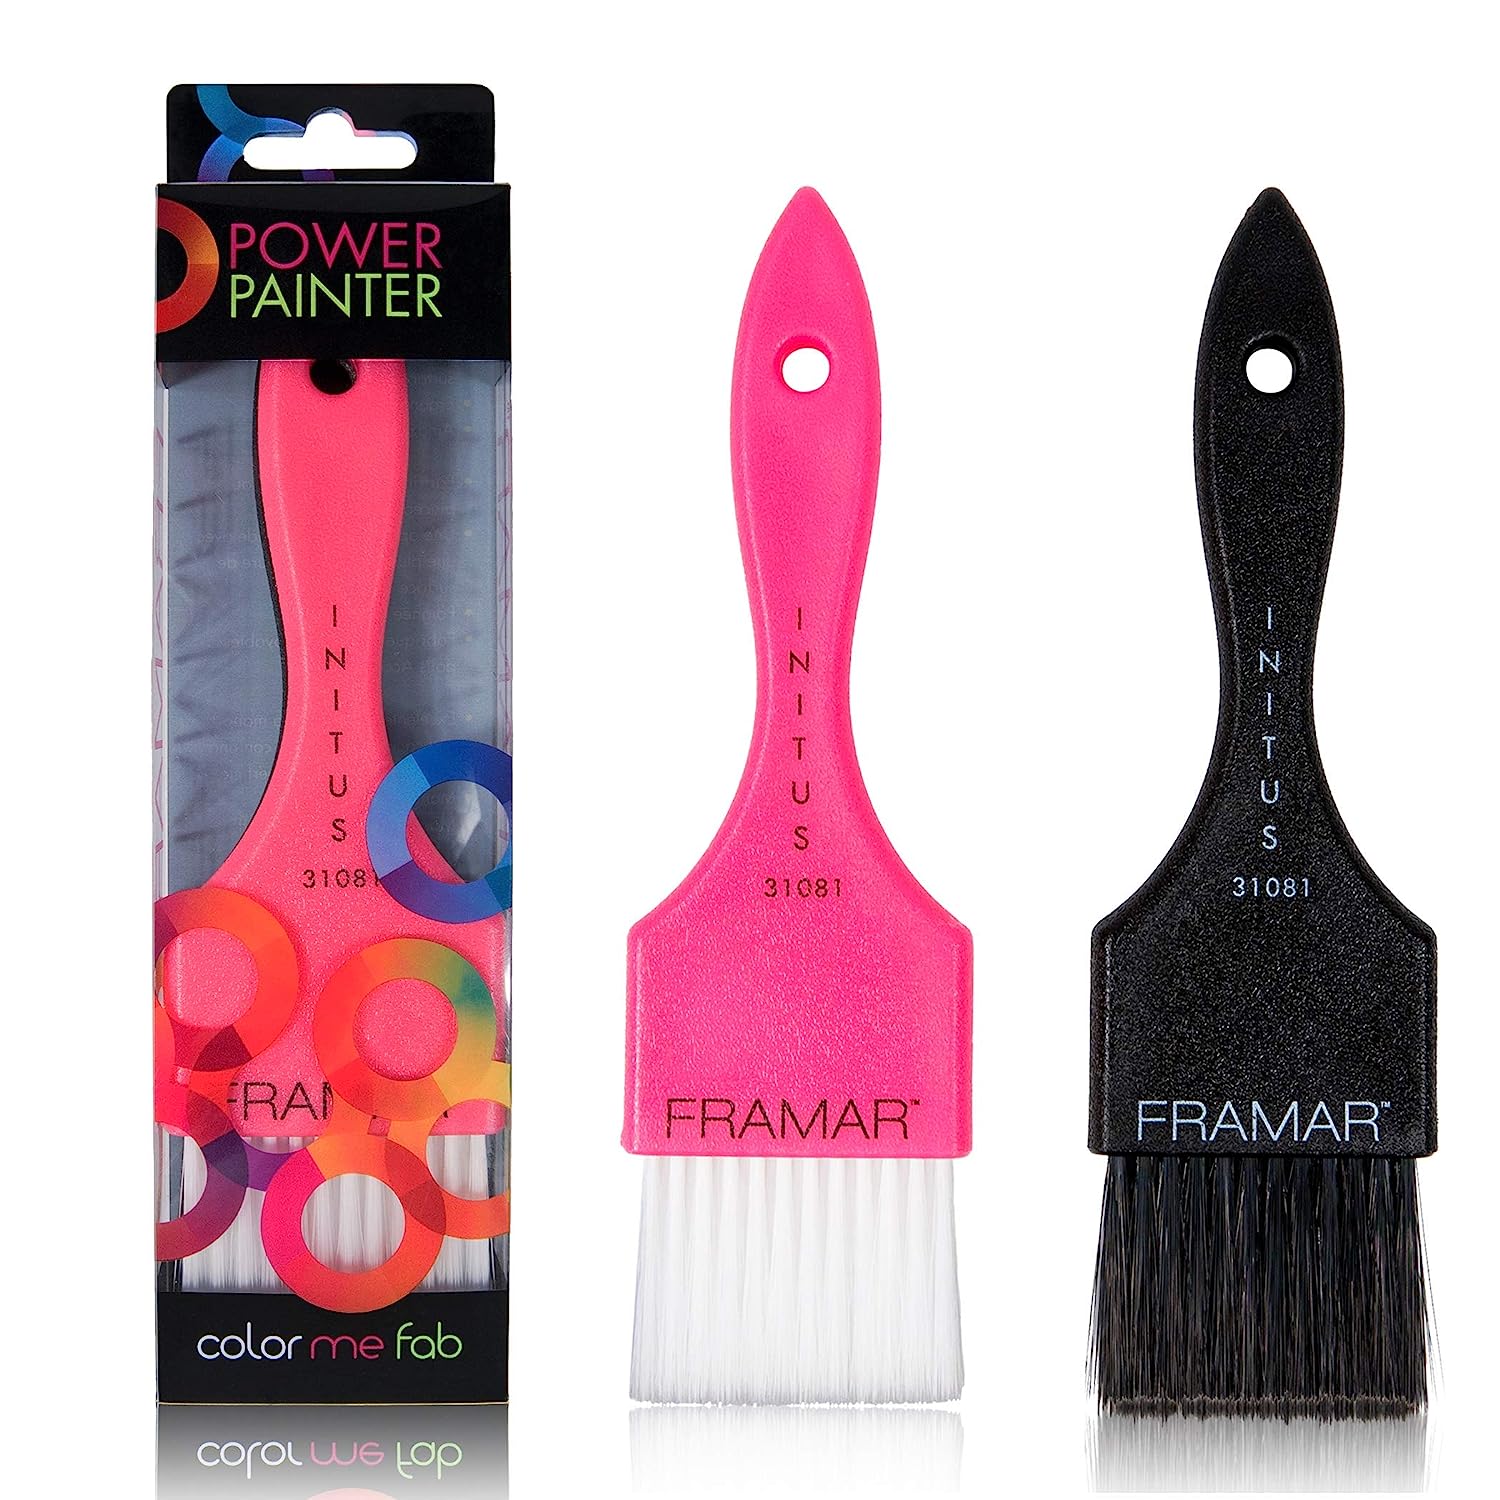 Framar Power Painter Hair Dye Brush - Hair Coloring [...]